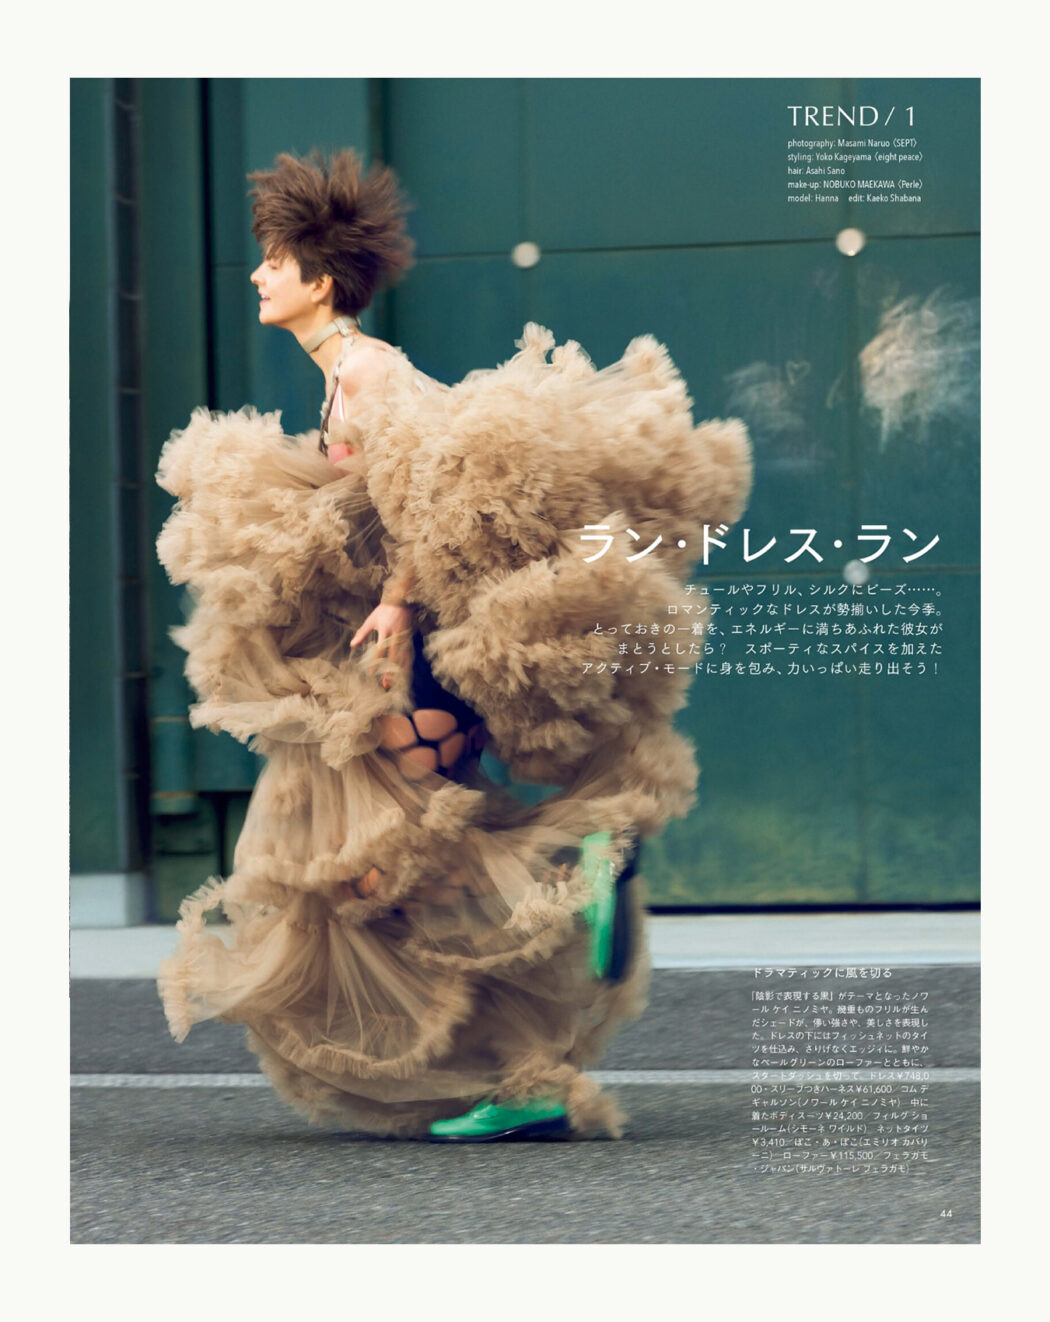 Styled by Yoko Kageyama
SPUR 2022 / RUN DRESS RUN